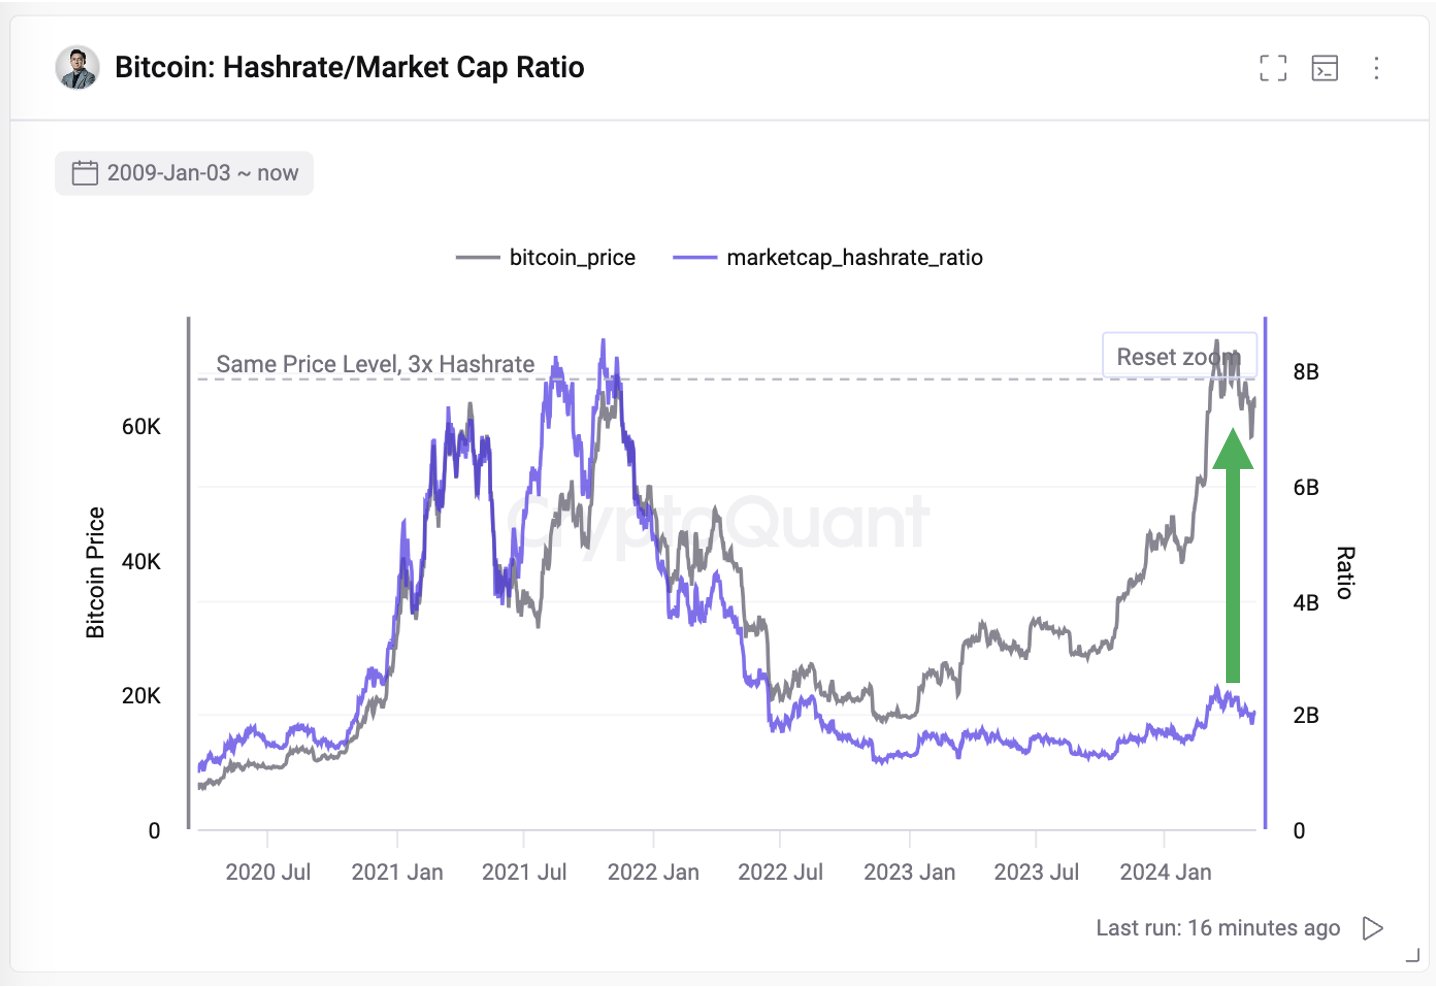 Bitcoin Hashrate/Market Cap Ratio